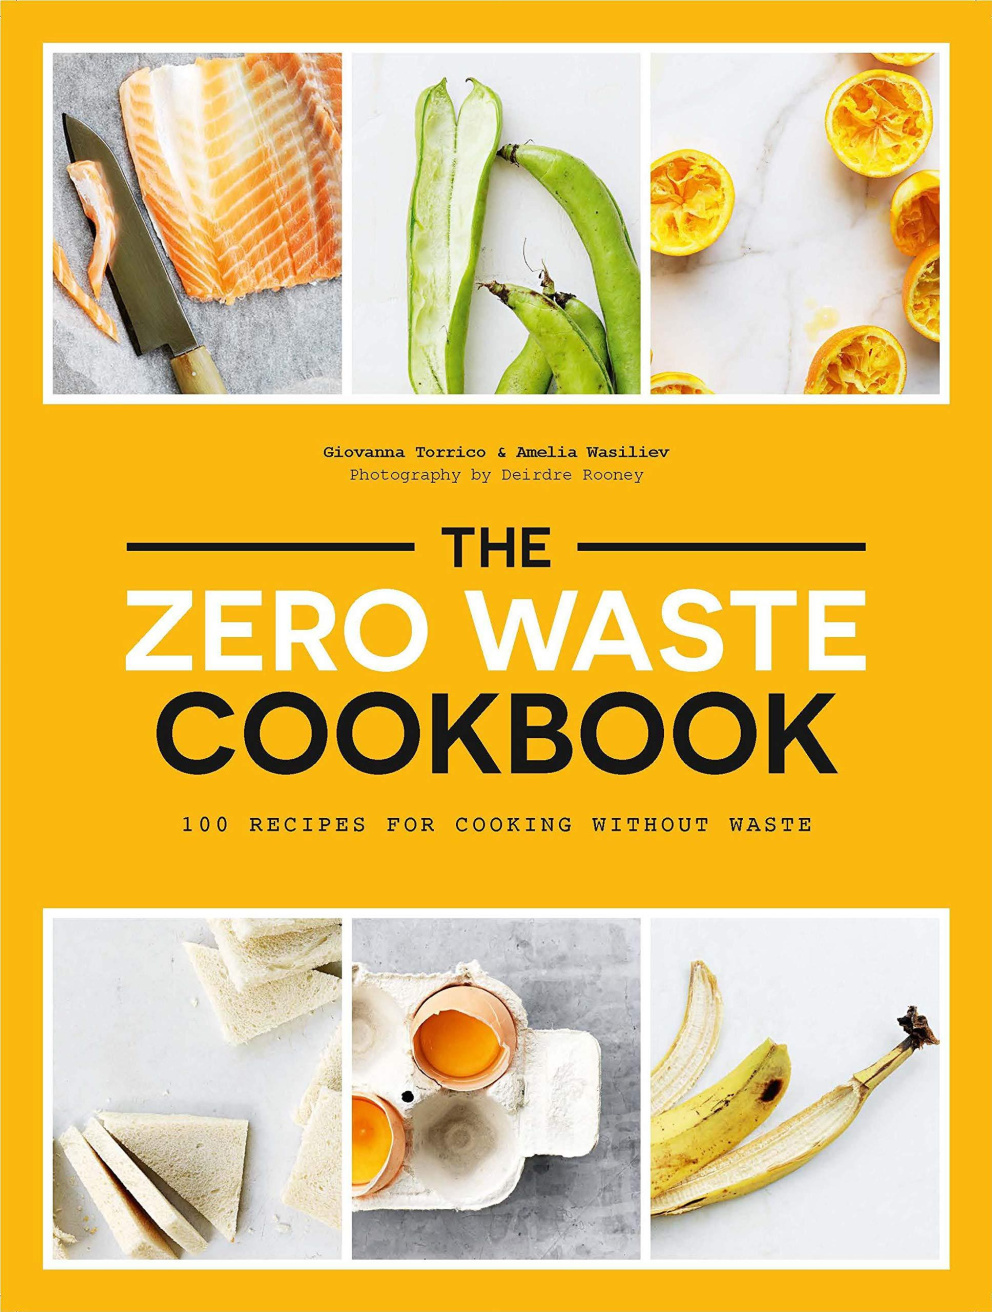 The zero waste cookbook